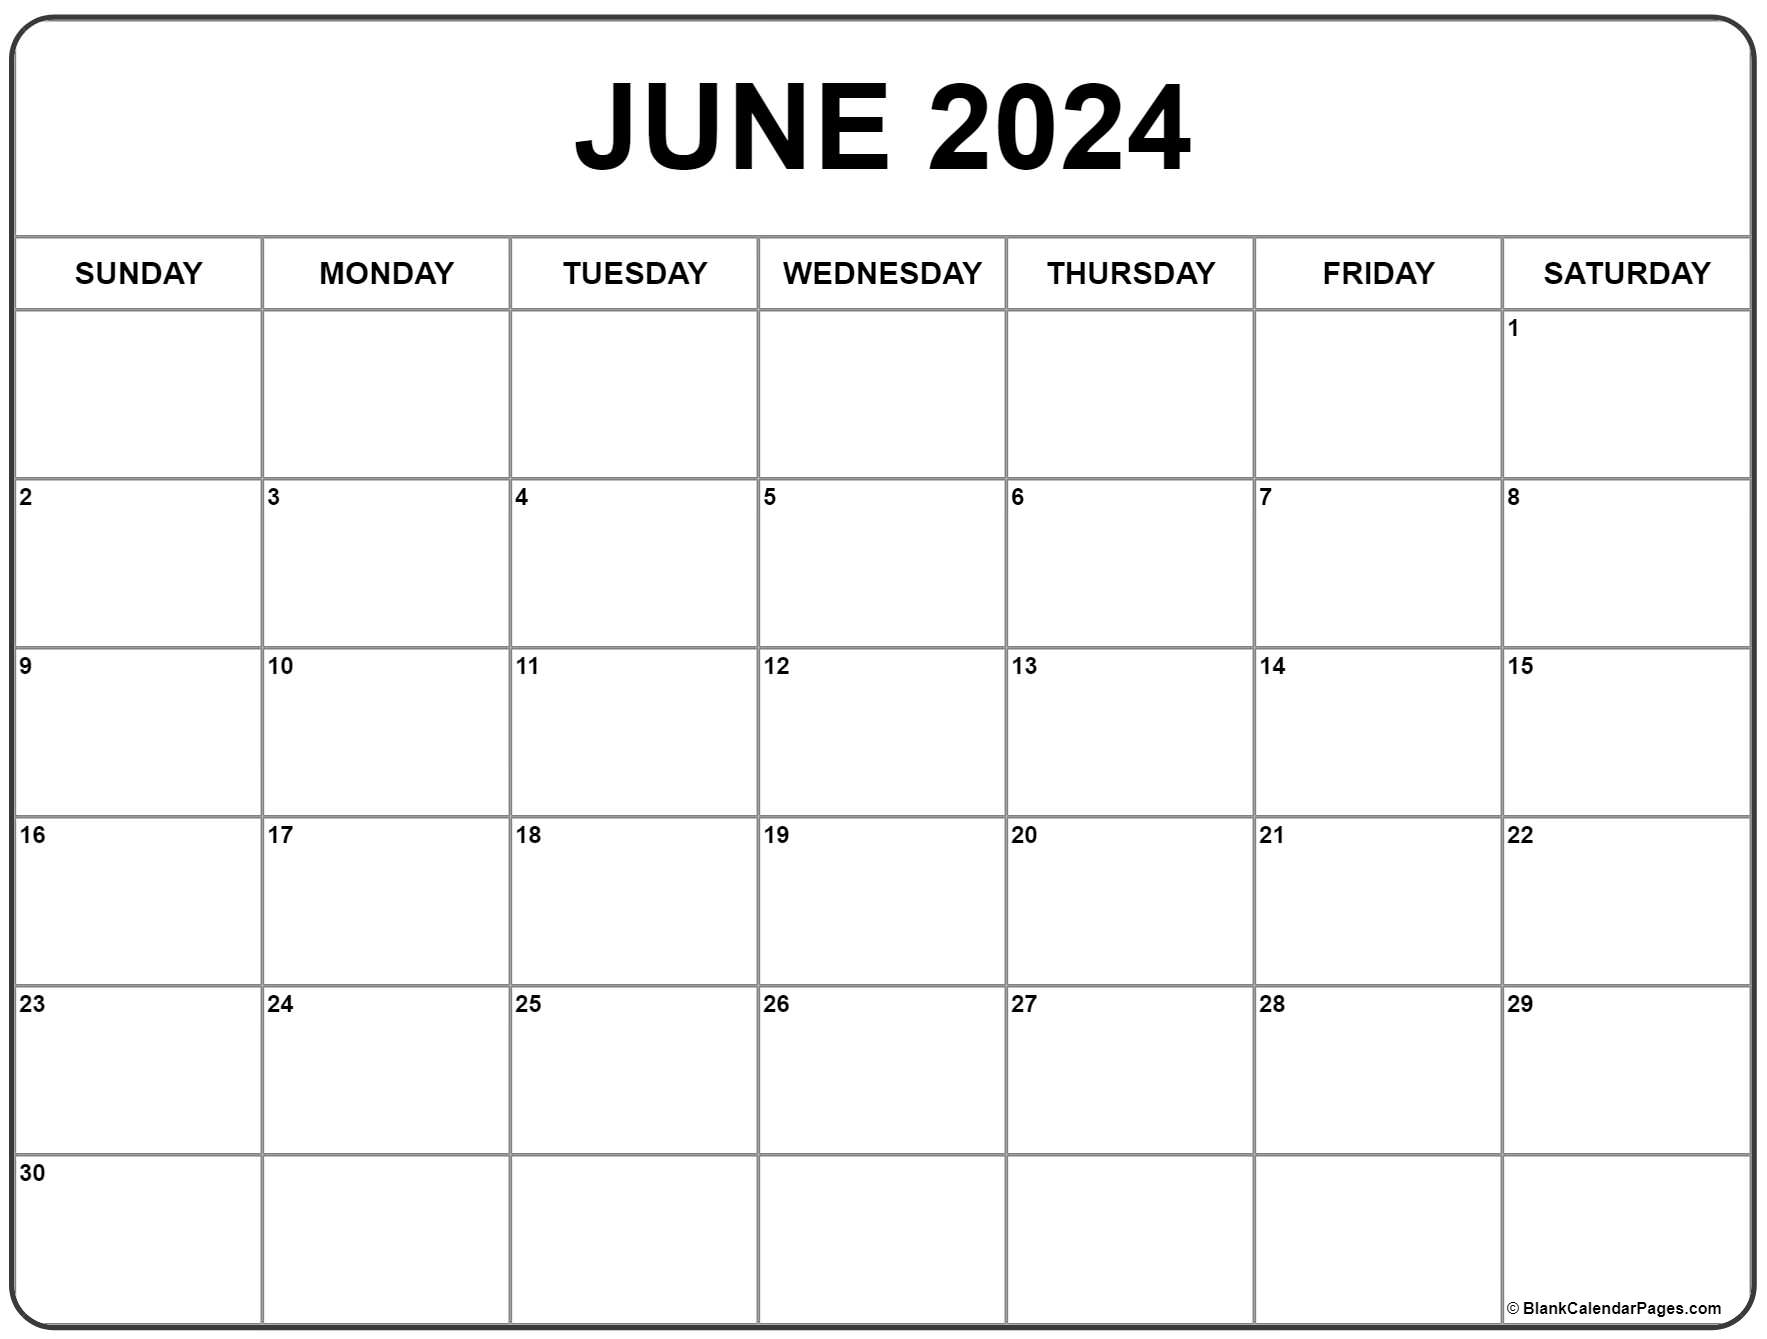 May June 2022 Calendar June 2022 Calendar | Free Printable Calendar Templates